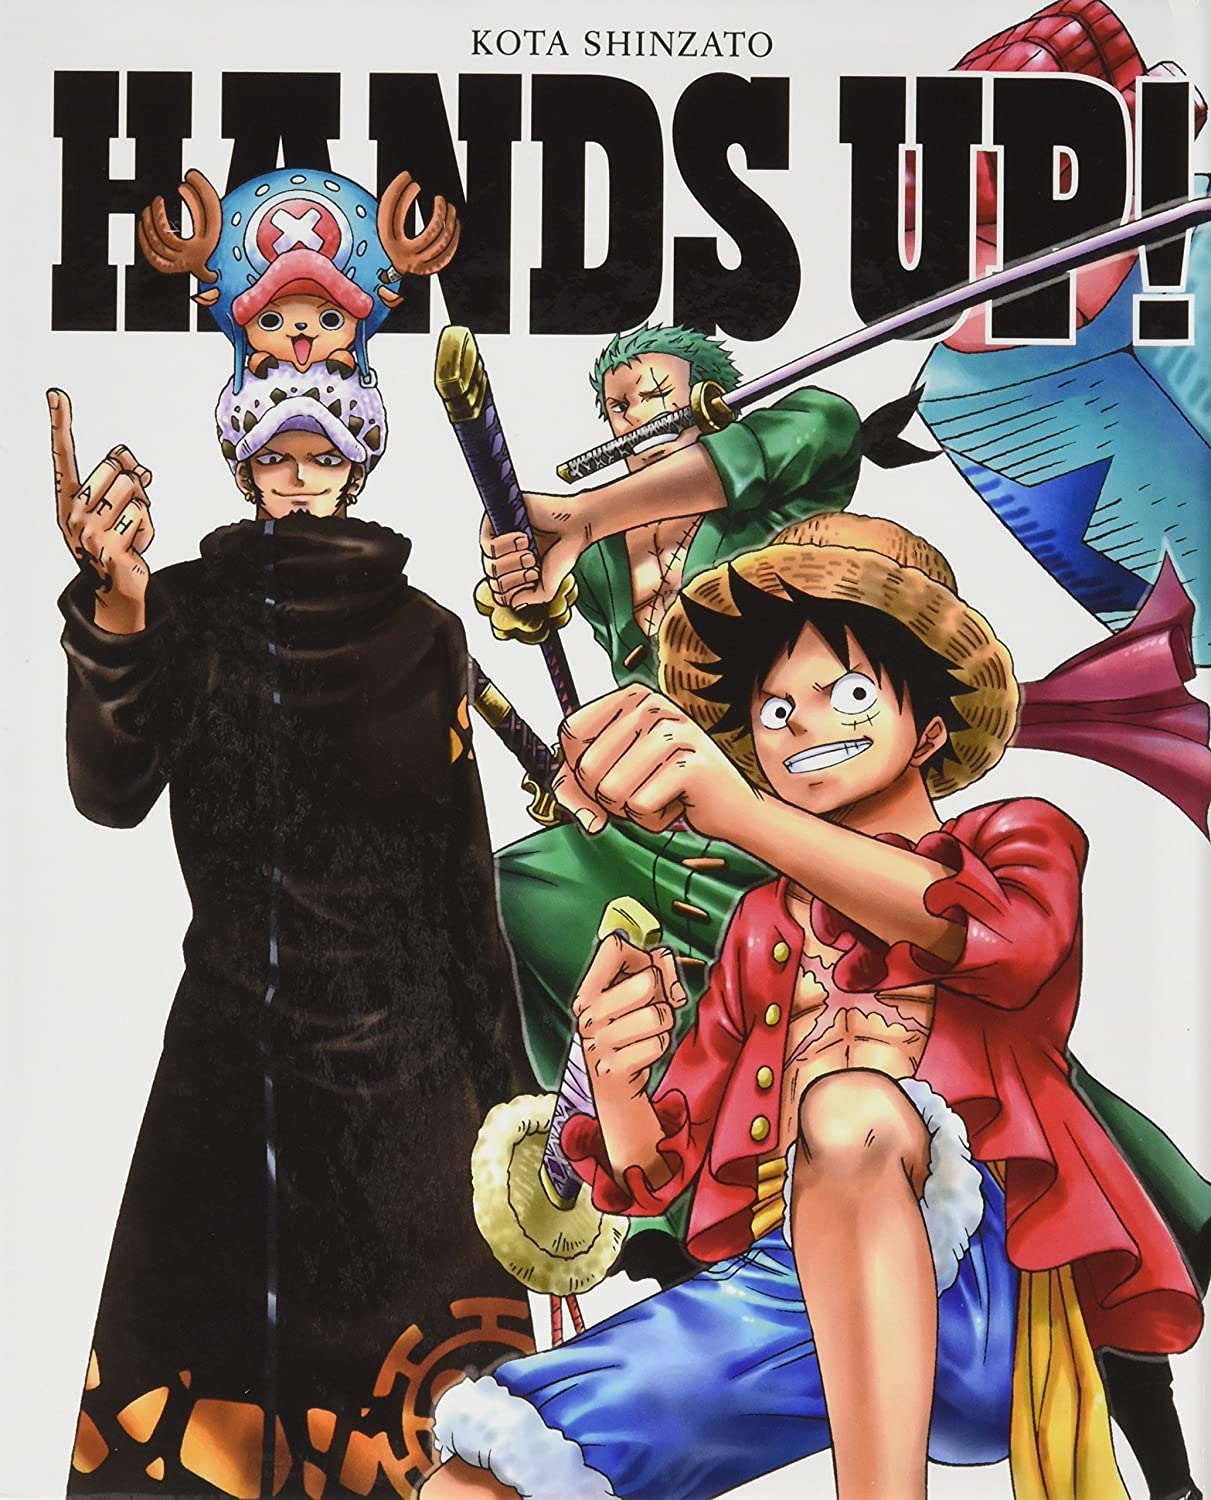 Hands Up!, One Piece Wiki